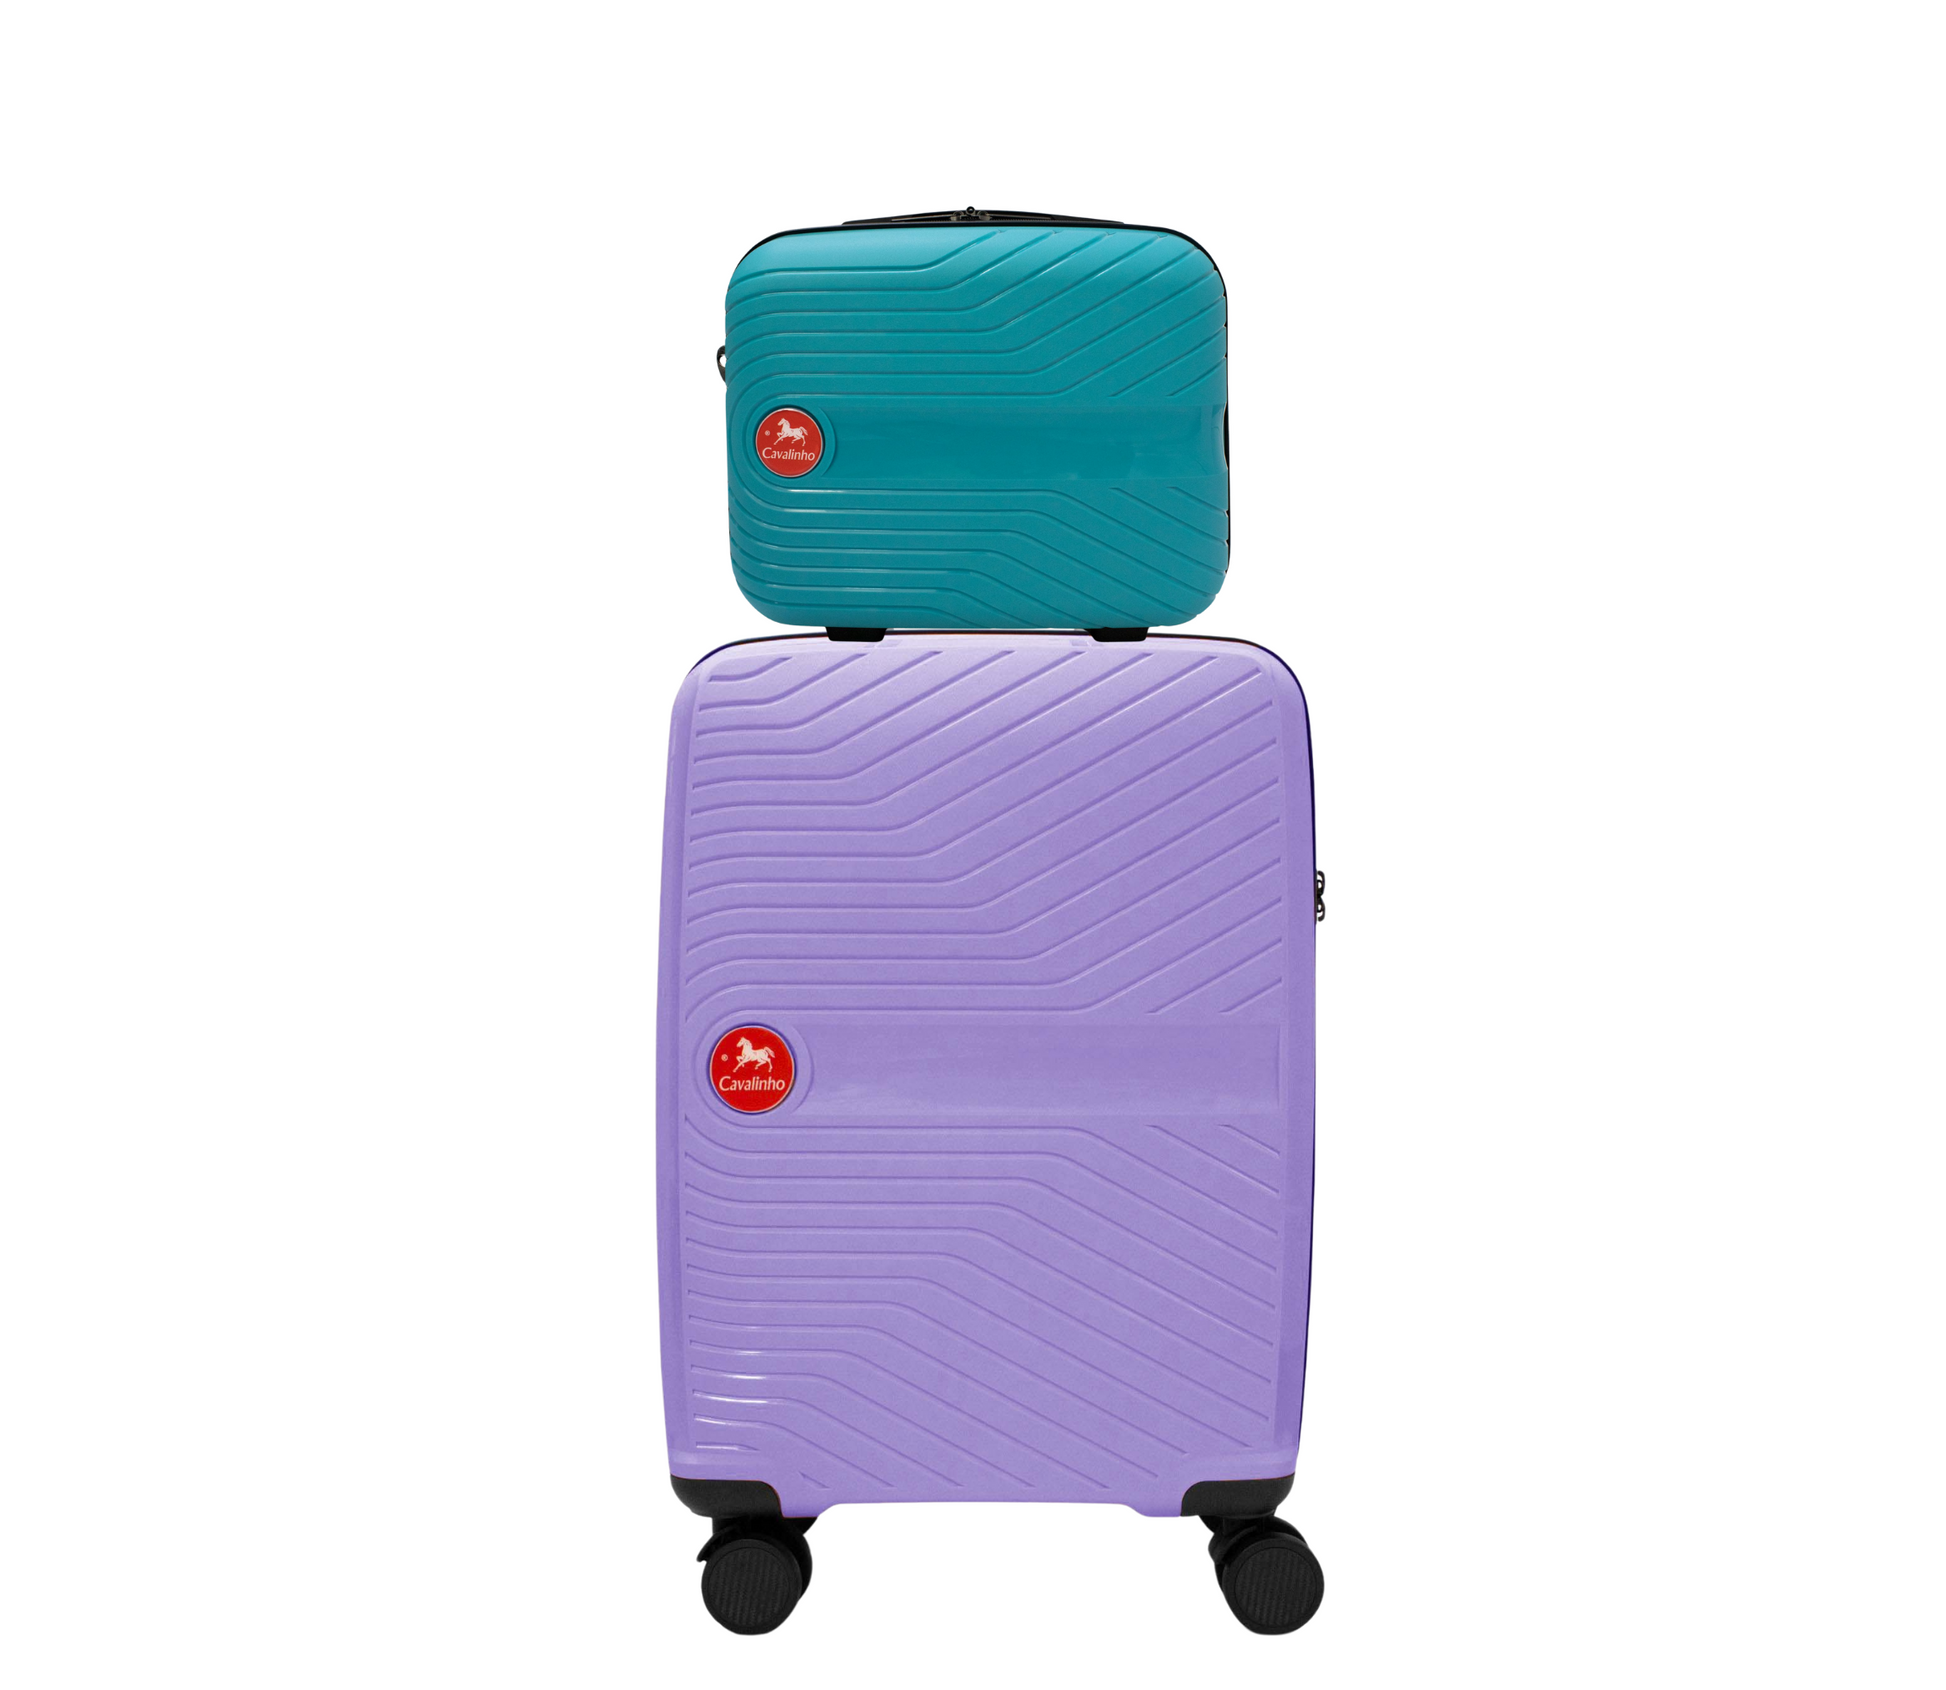 Cavalinho Colorful 2 Piece Luggage Set (15" & 19") - DarkTurquoise Lilac - 68020004.2539.S1519._1